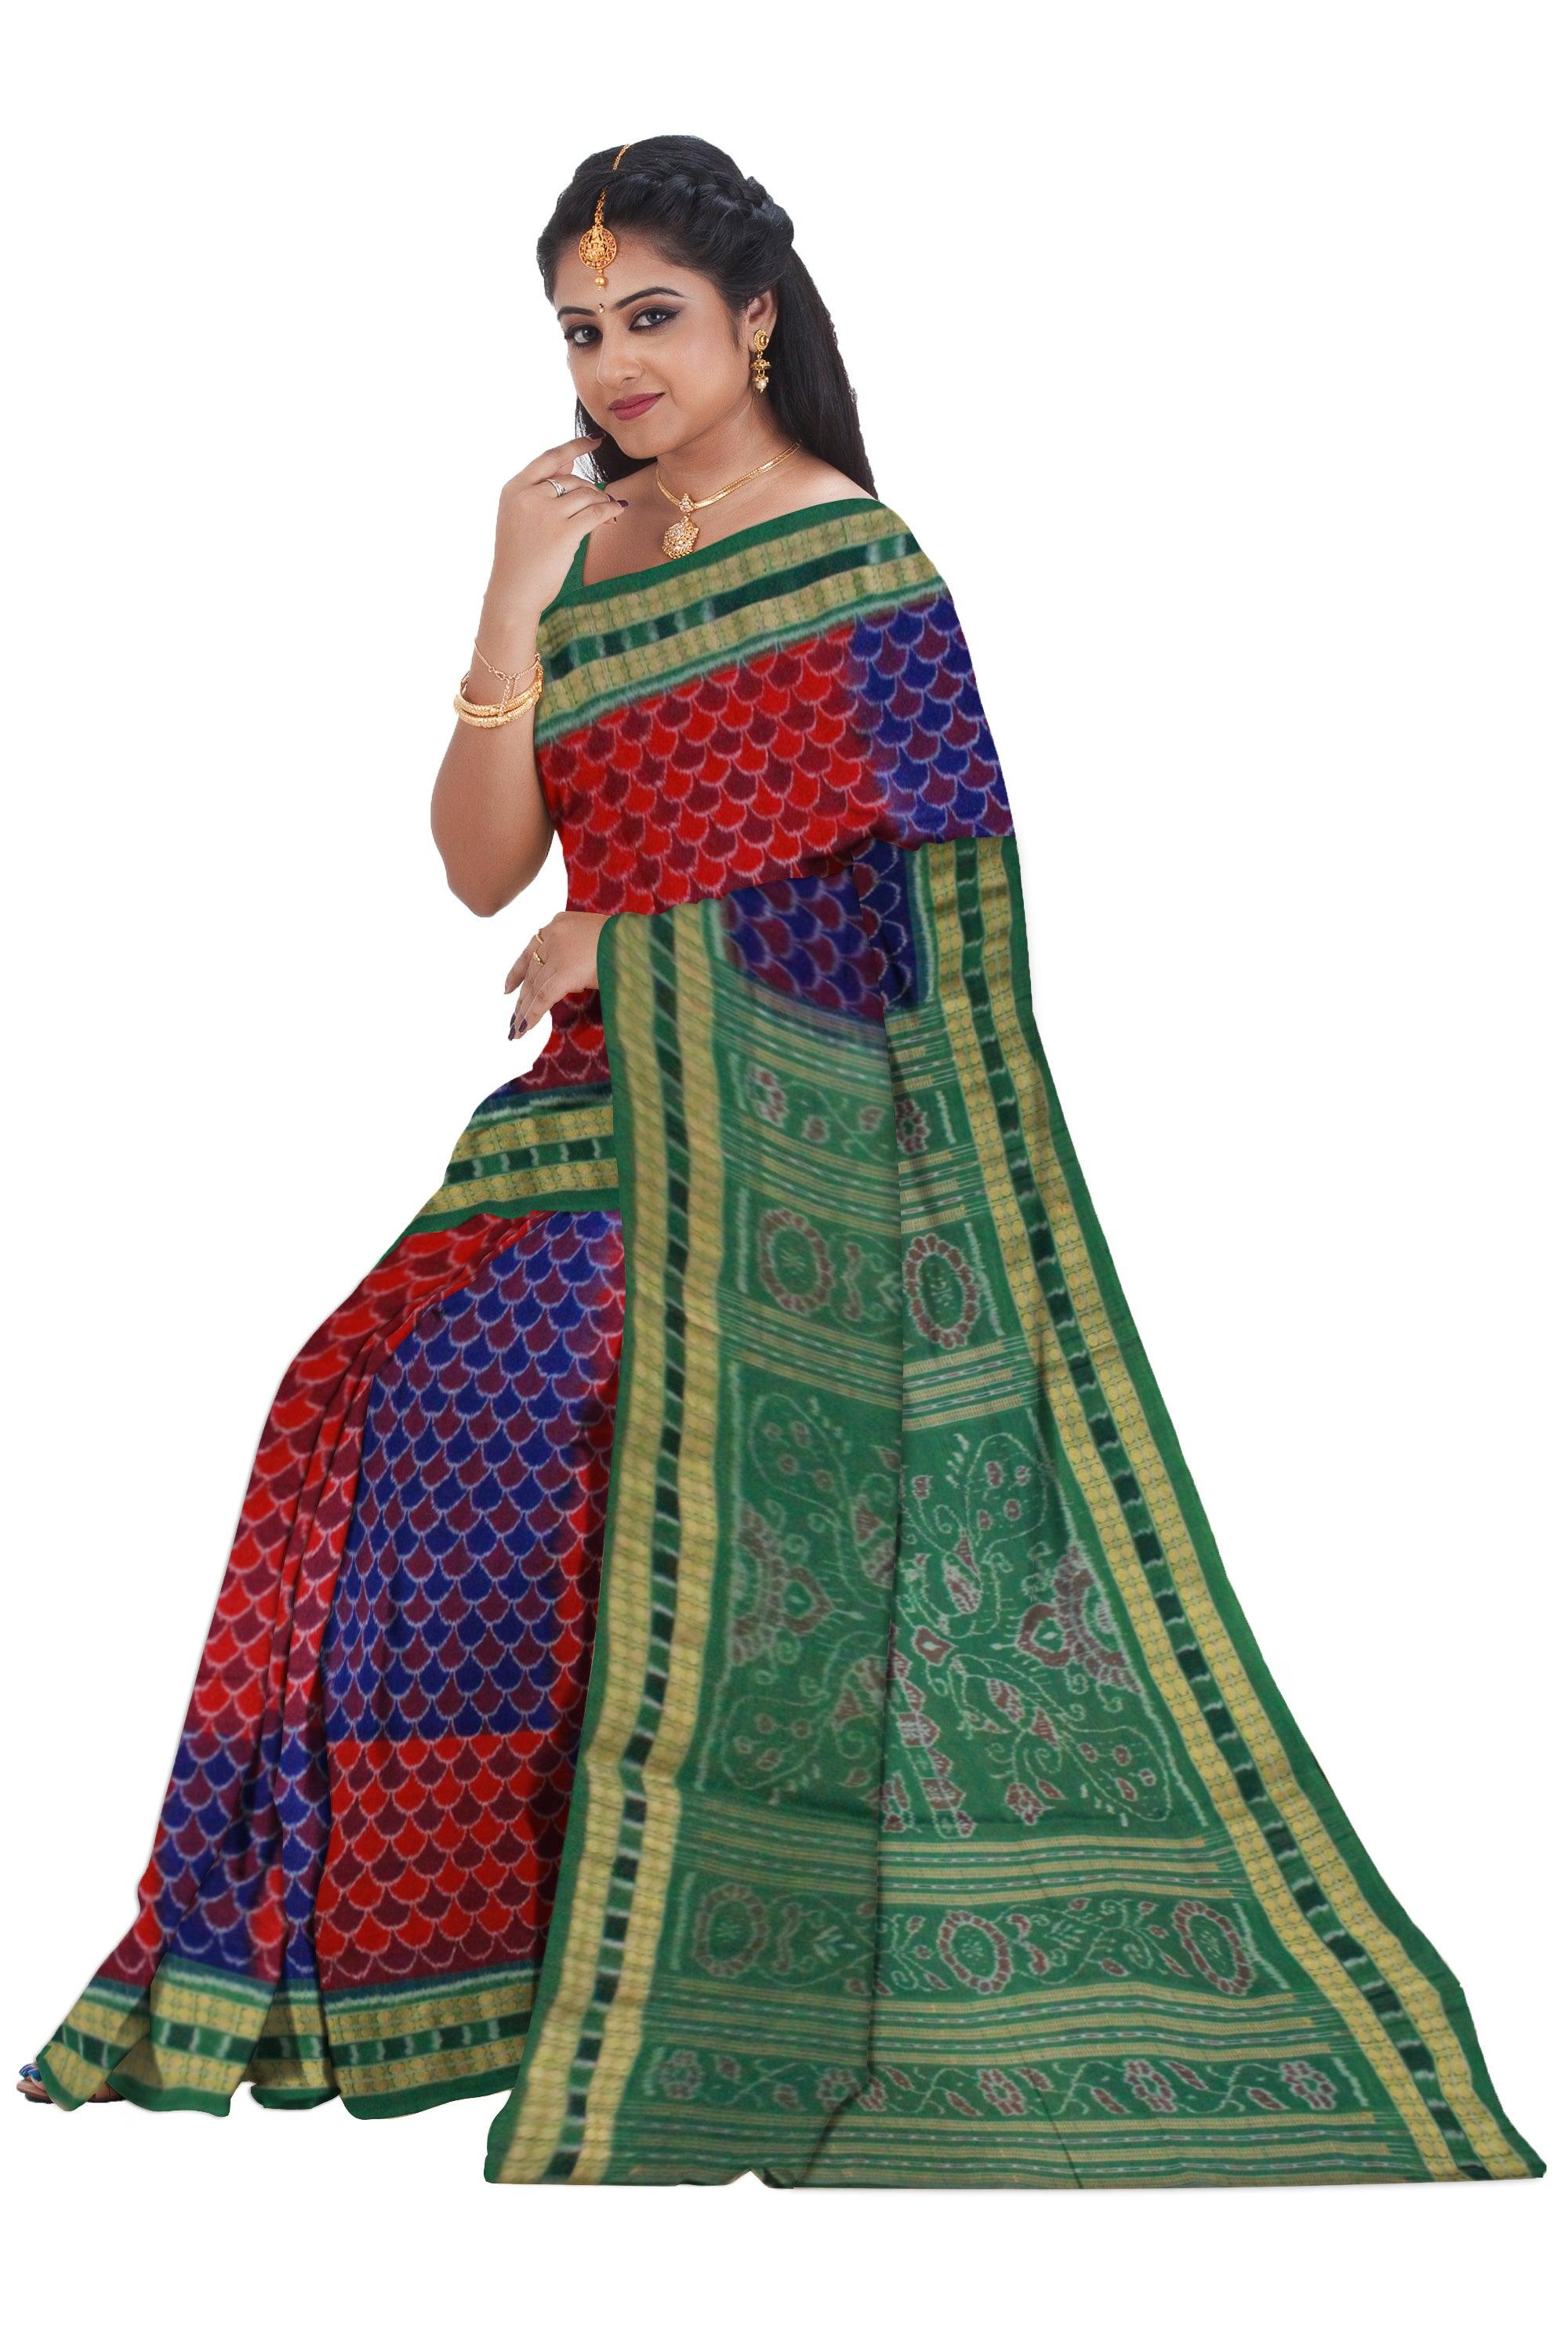 Paper Bandha Sambalpuri saree Bomkai Design in Blue and Maroon Colour - Koshali Arts & Crafts Enterprise